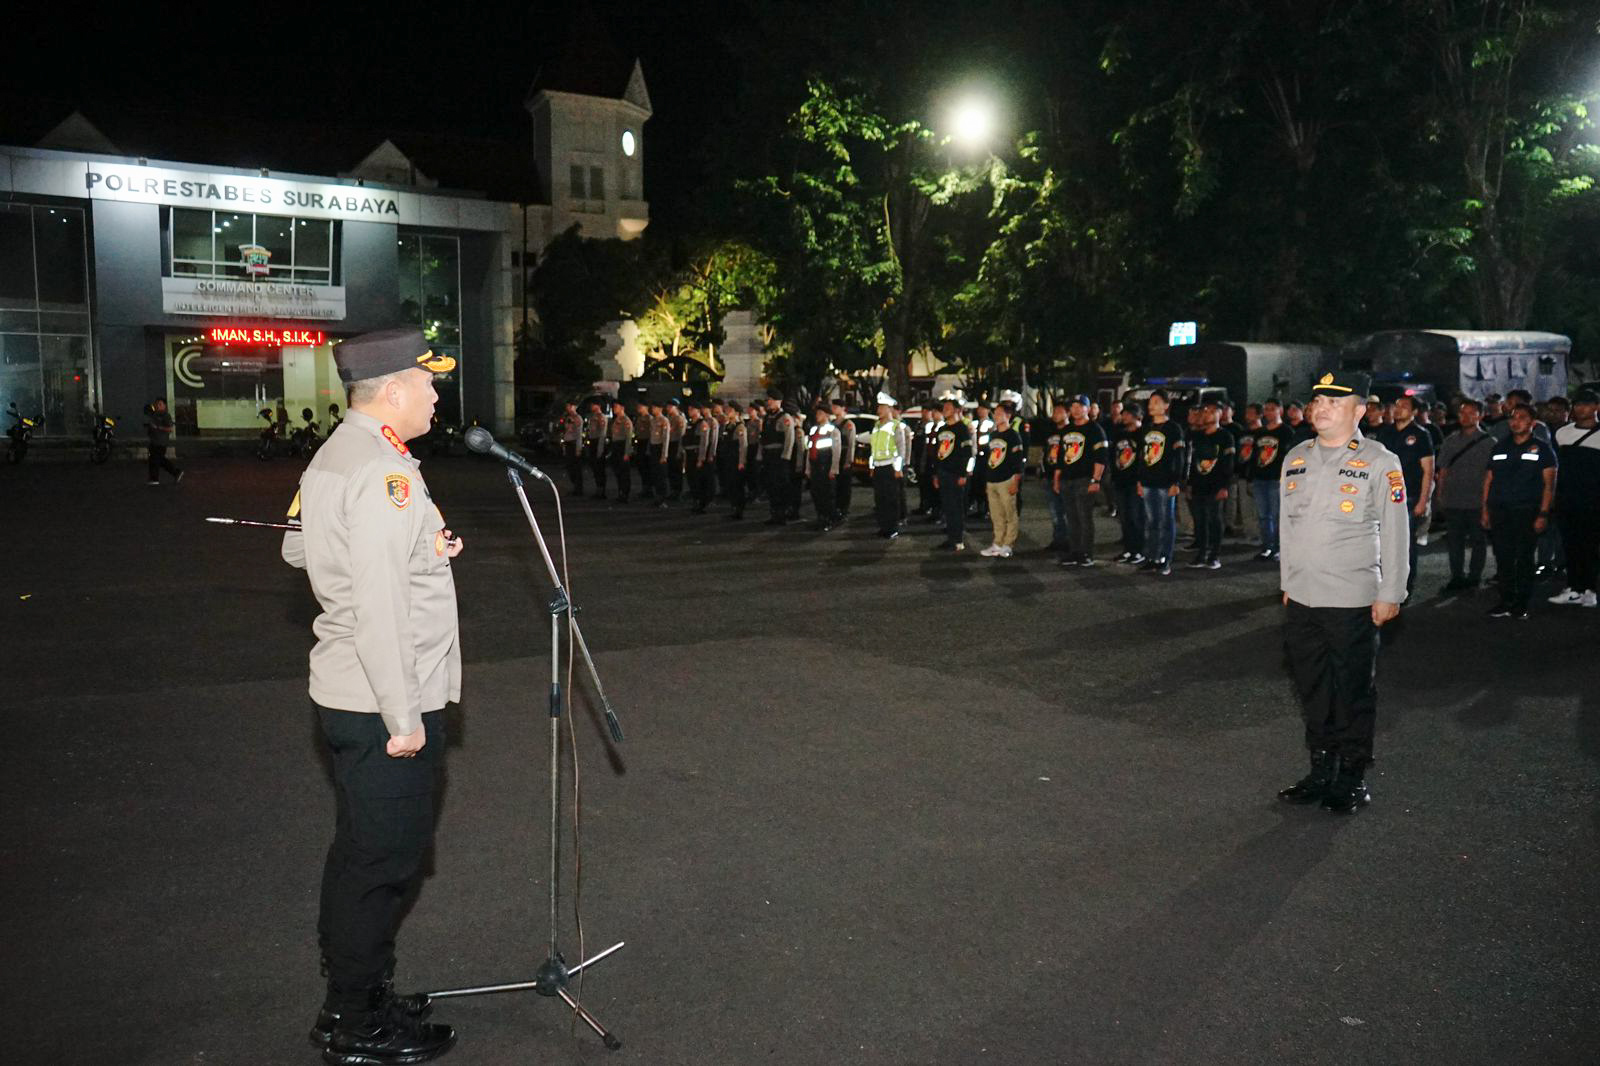 Antisipasi Kejahatan di Malam Hari, Polrestabes Surabaya Gelar Patroli Skala Besar